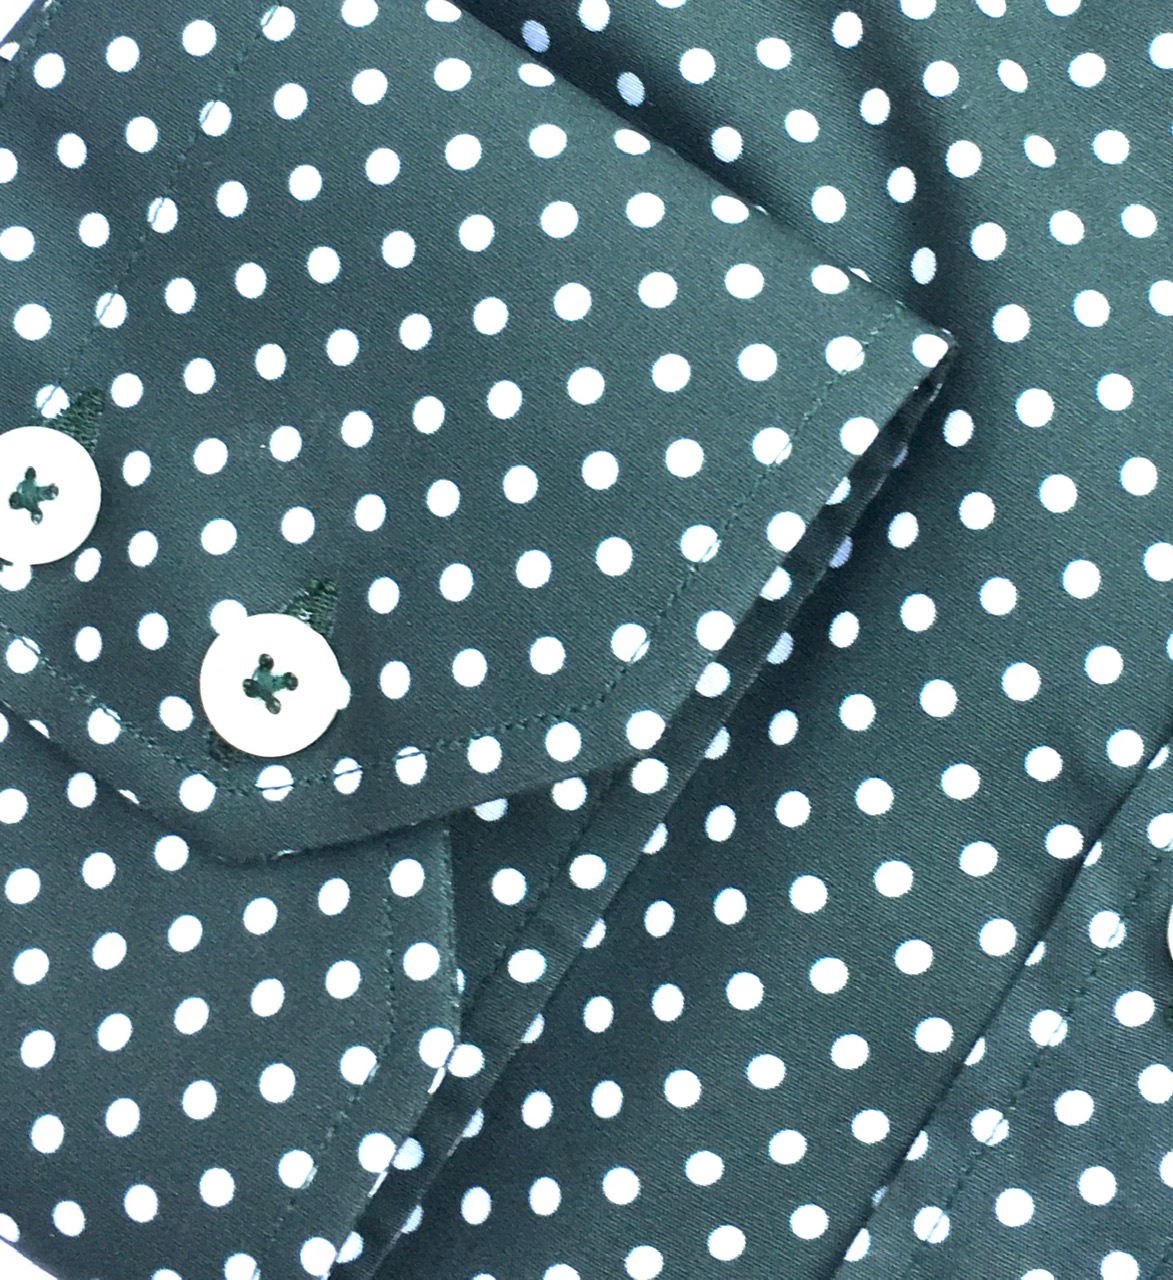 Men's Polka Dot Print Button Down Shirt in Racing Green & White